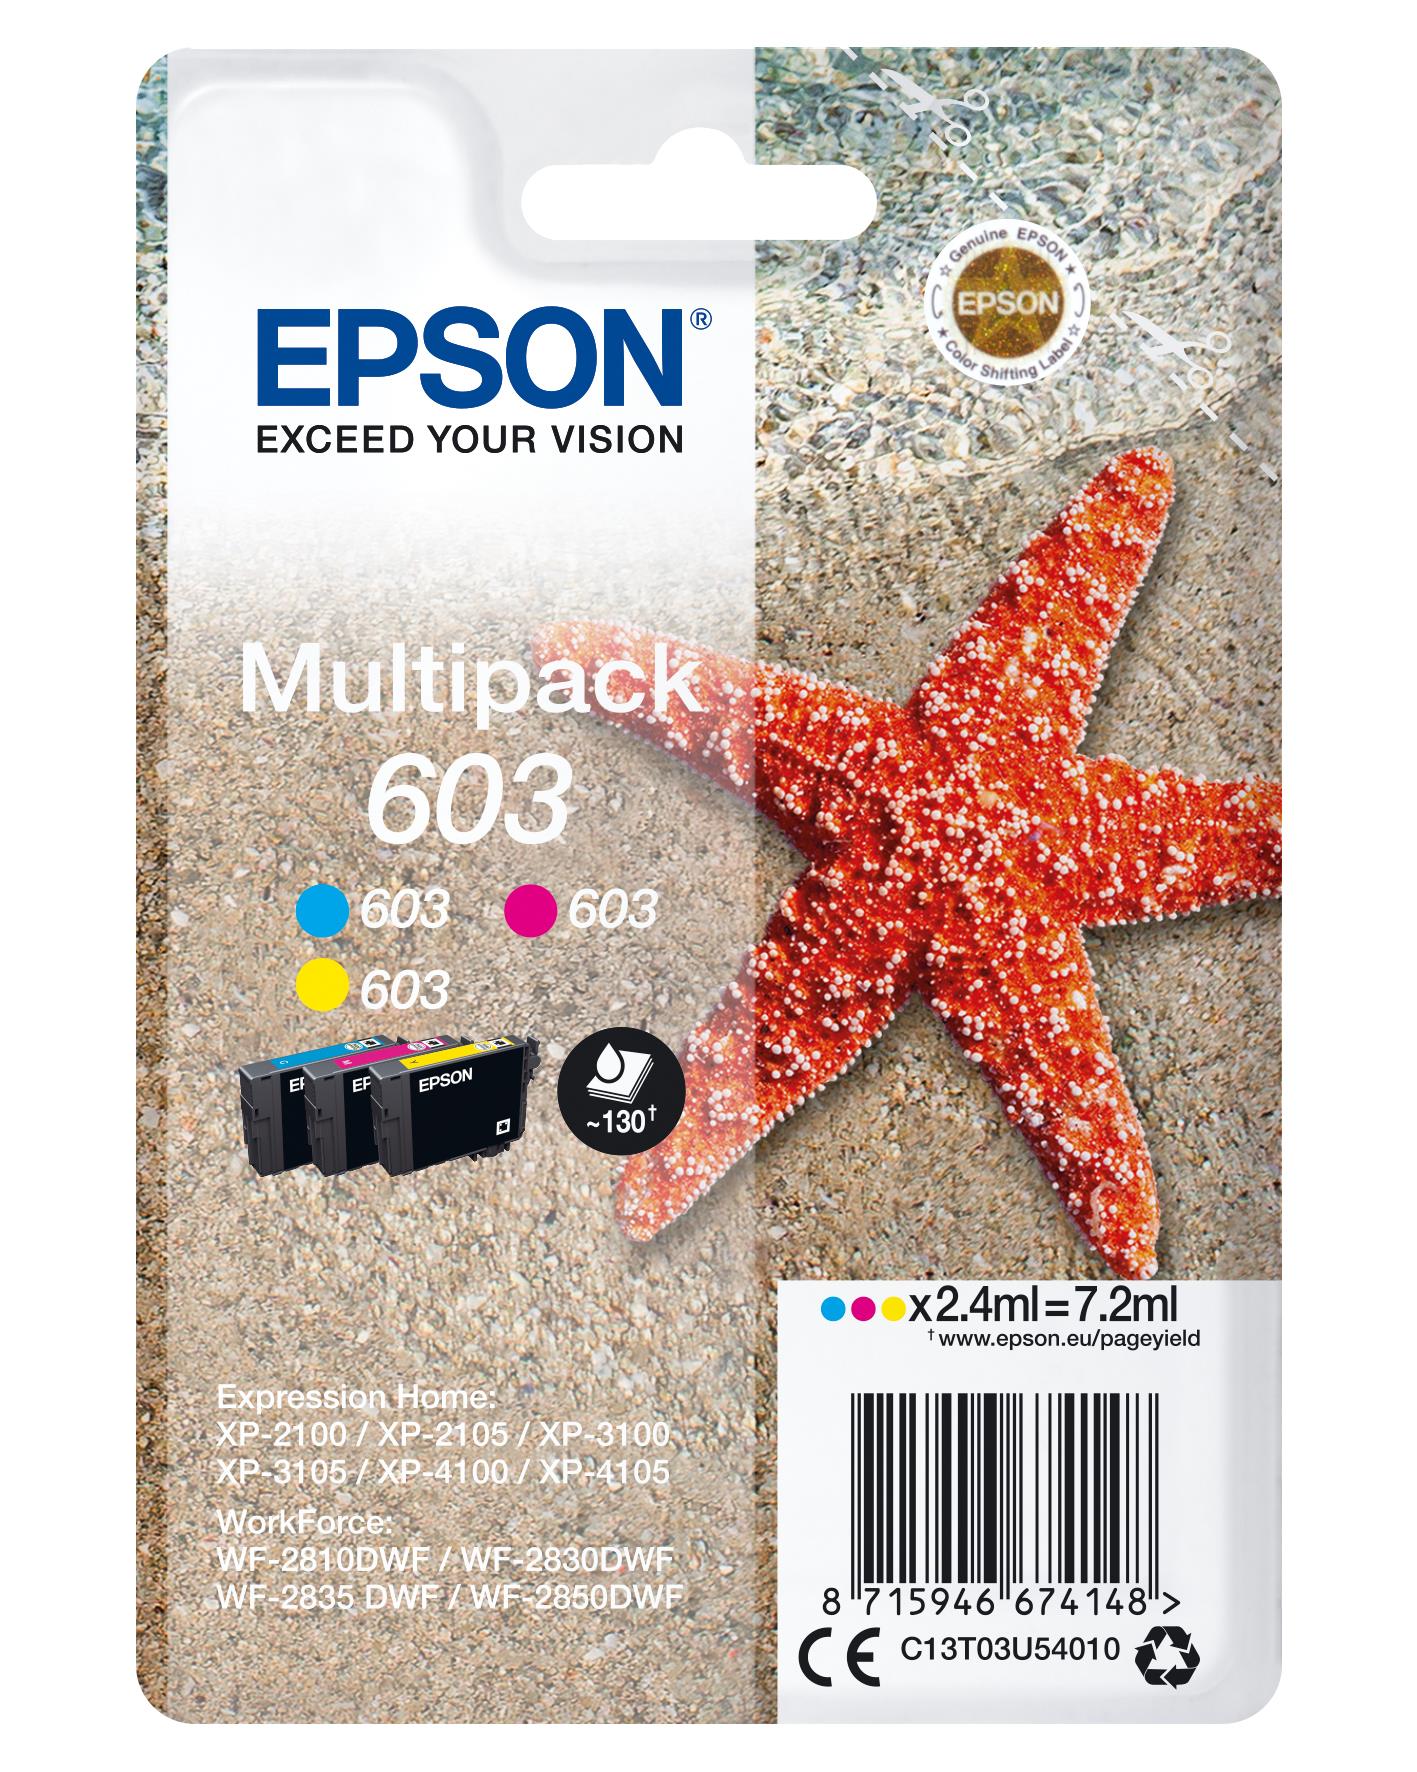 Epson Multipack 603 Stella